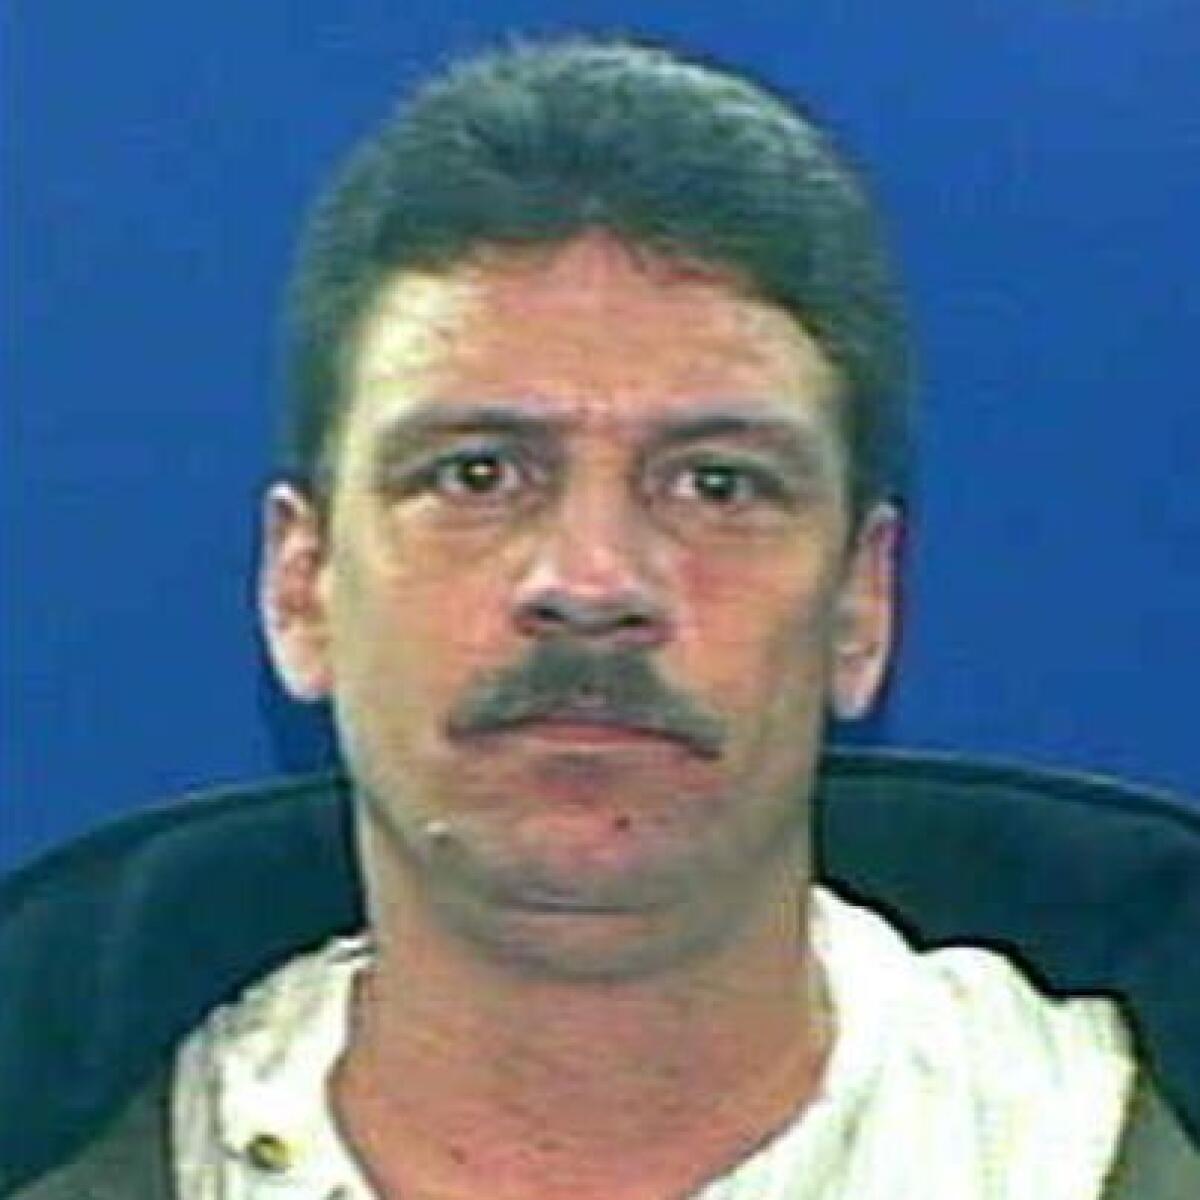 DMV photo of John Patrick "Pat" Hogan in 2000